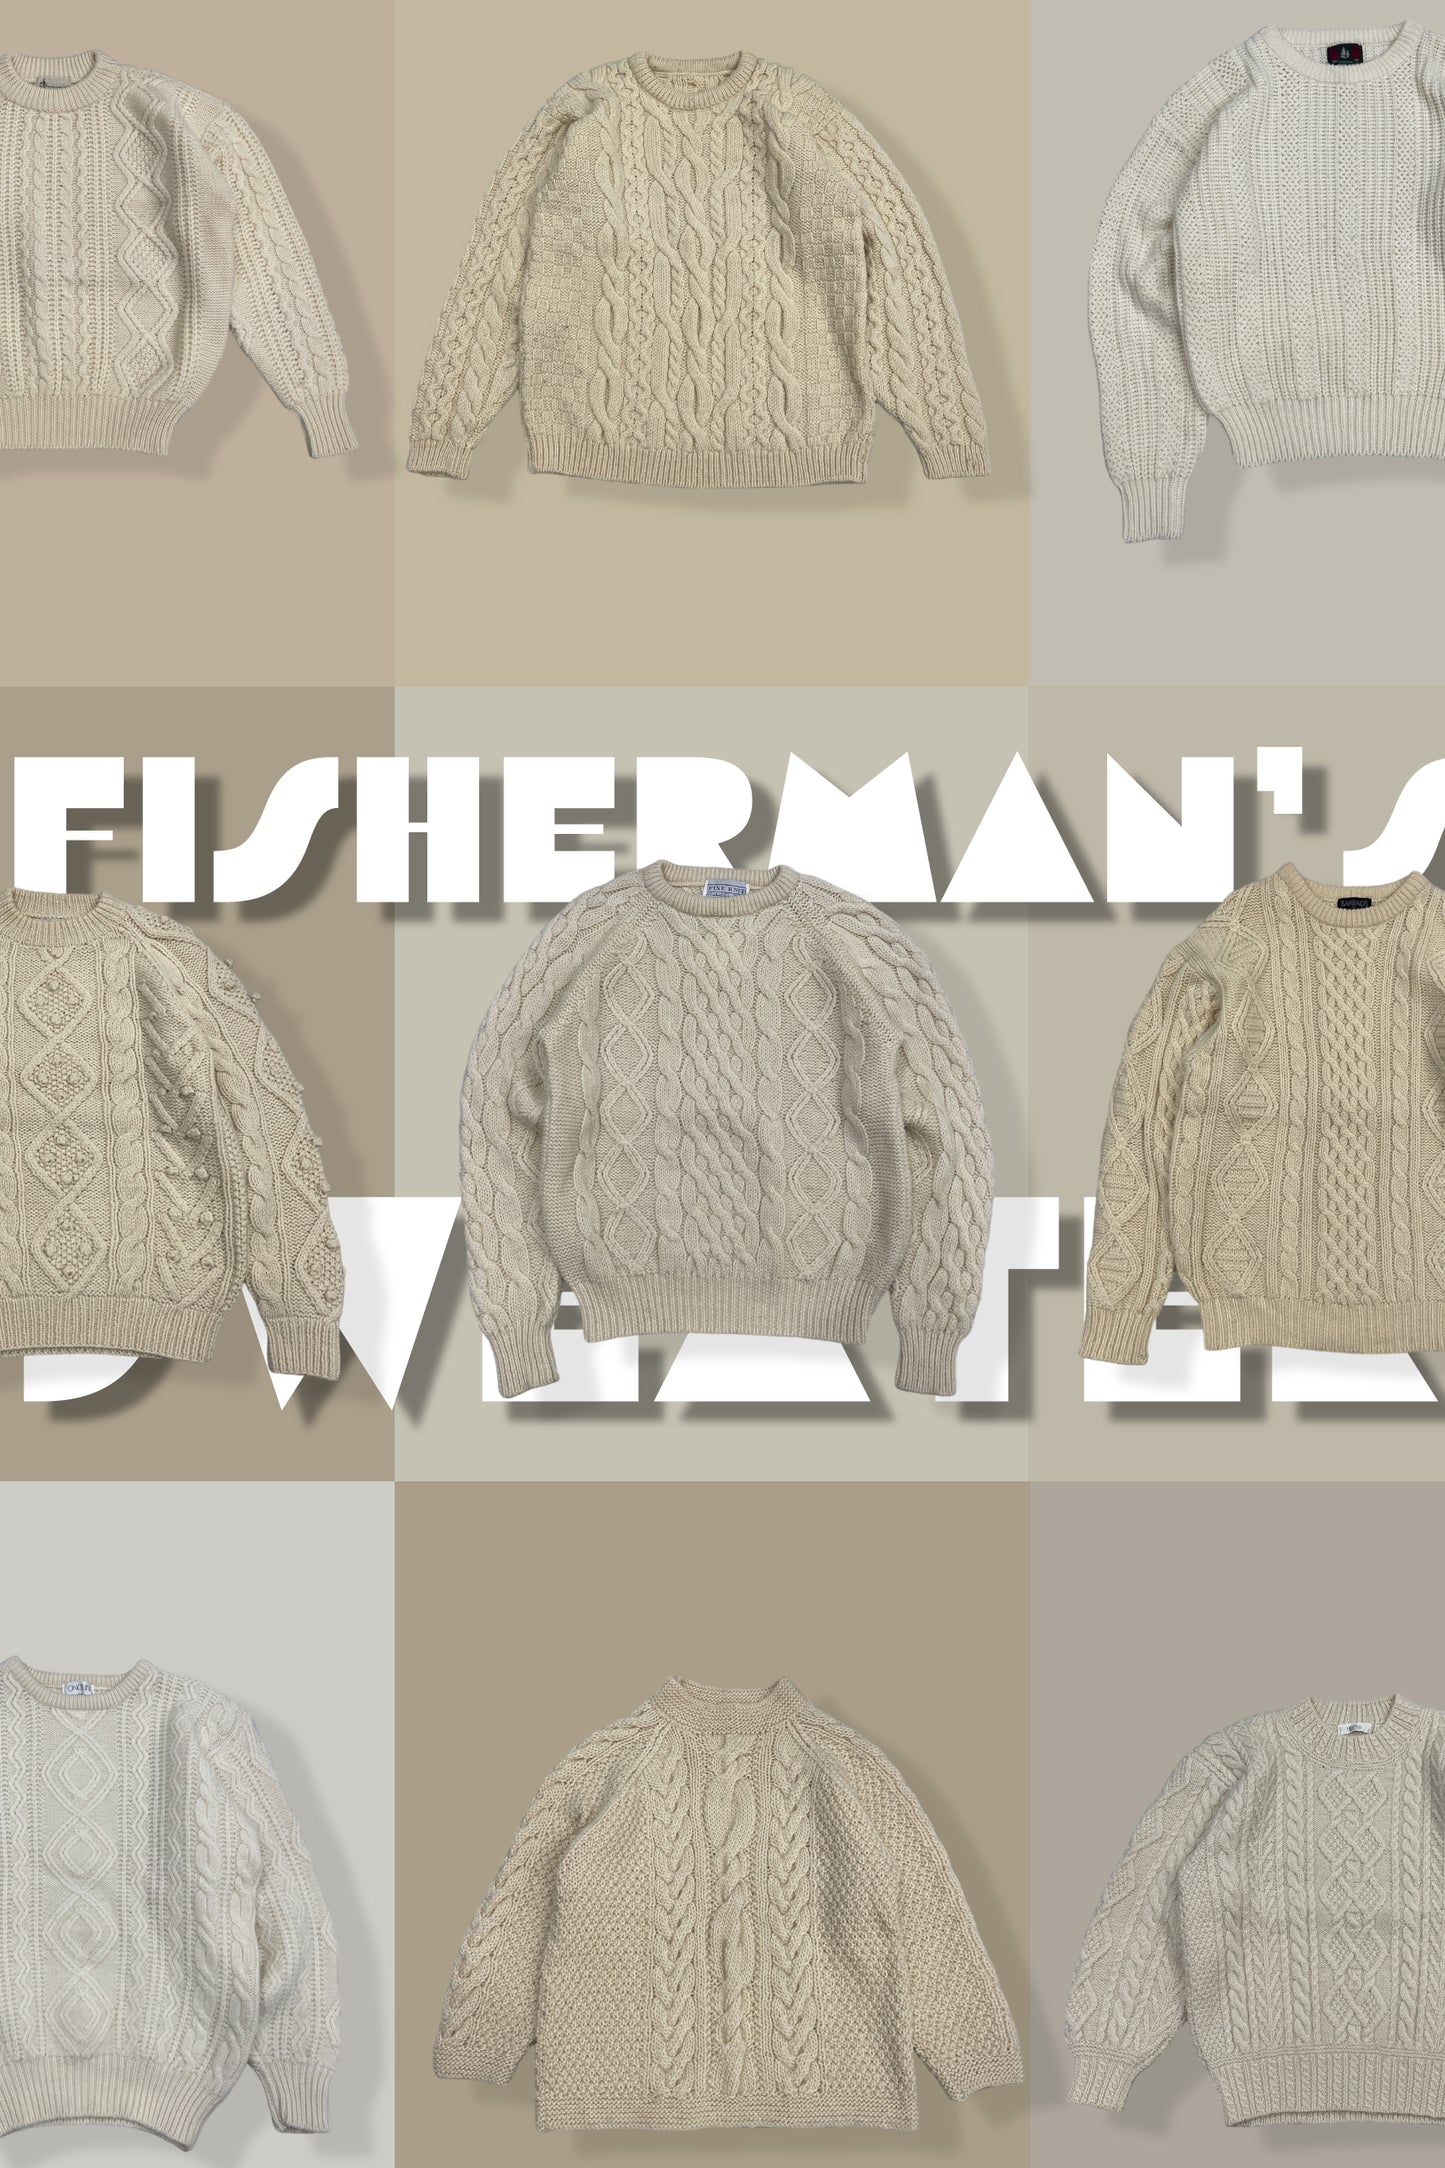 Fisherman's sweater x10点